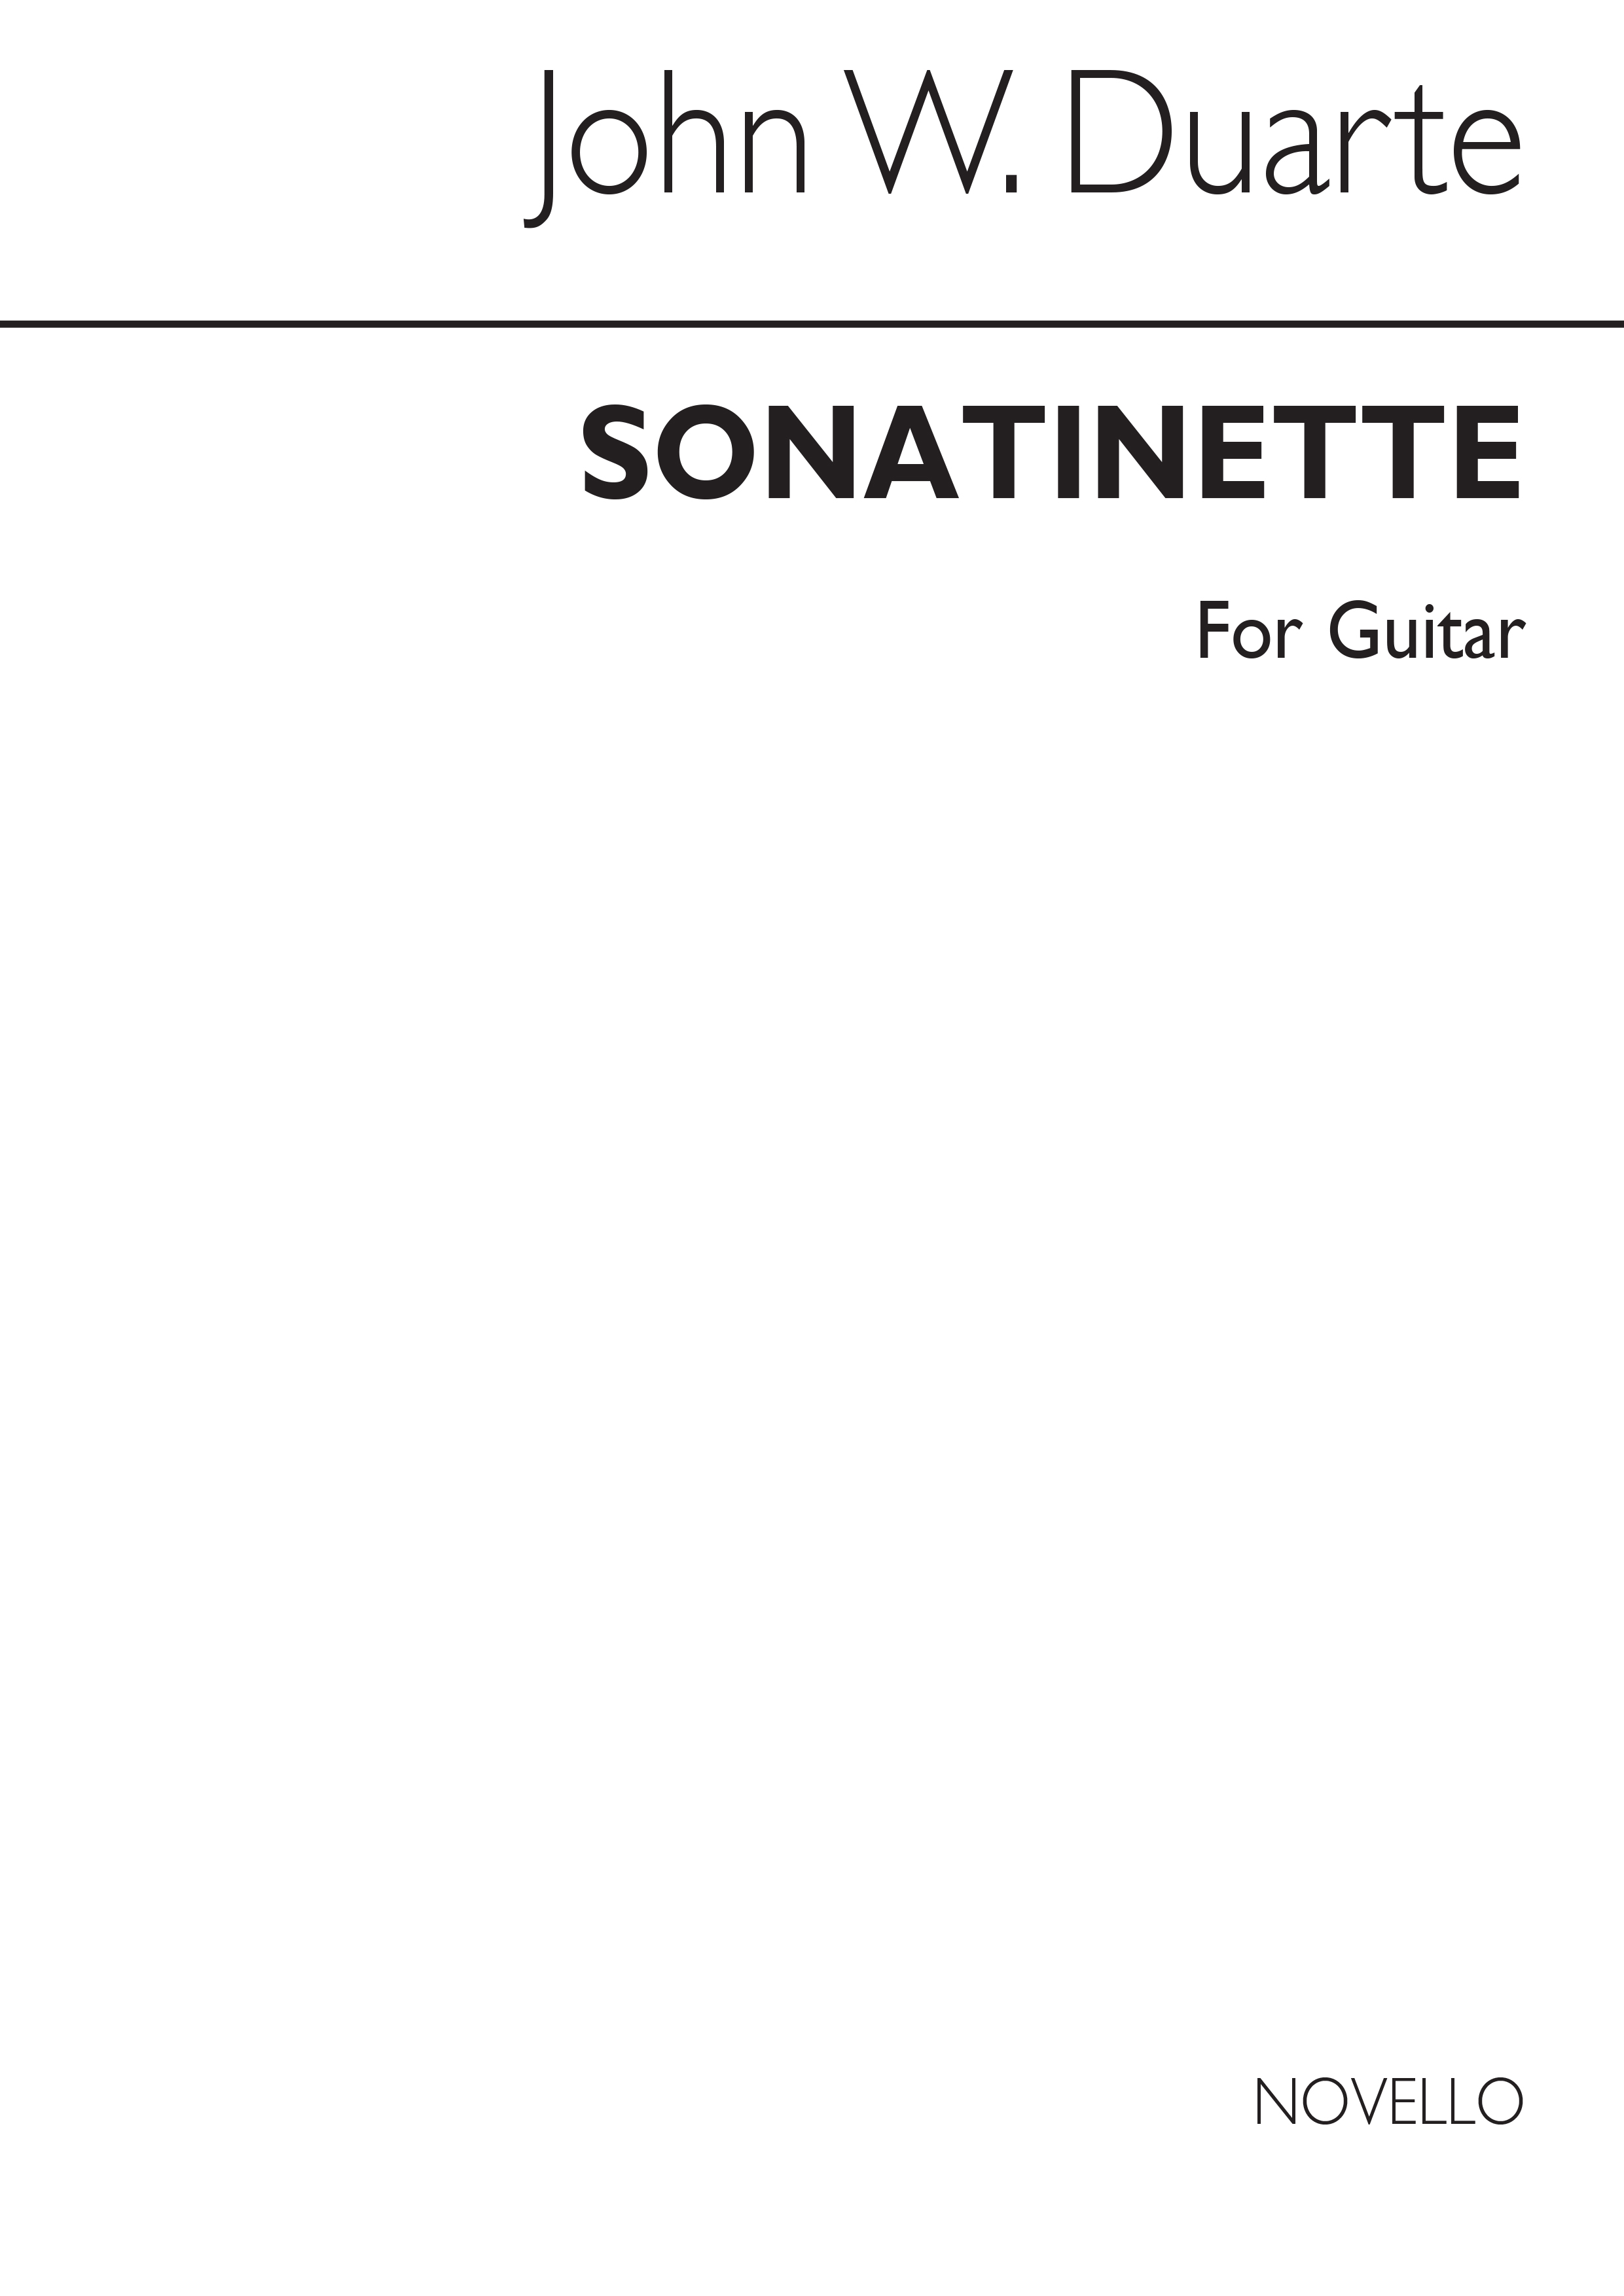 Duarte Sonatinette For Guitar